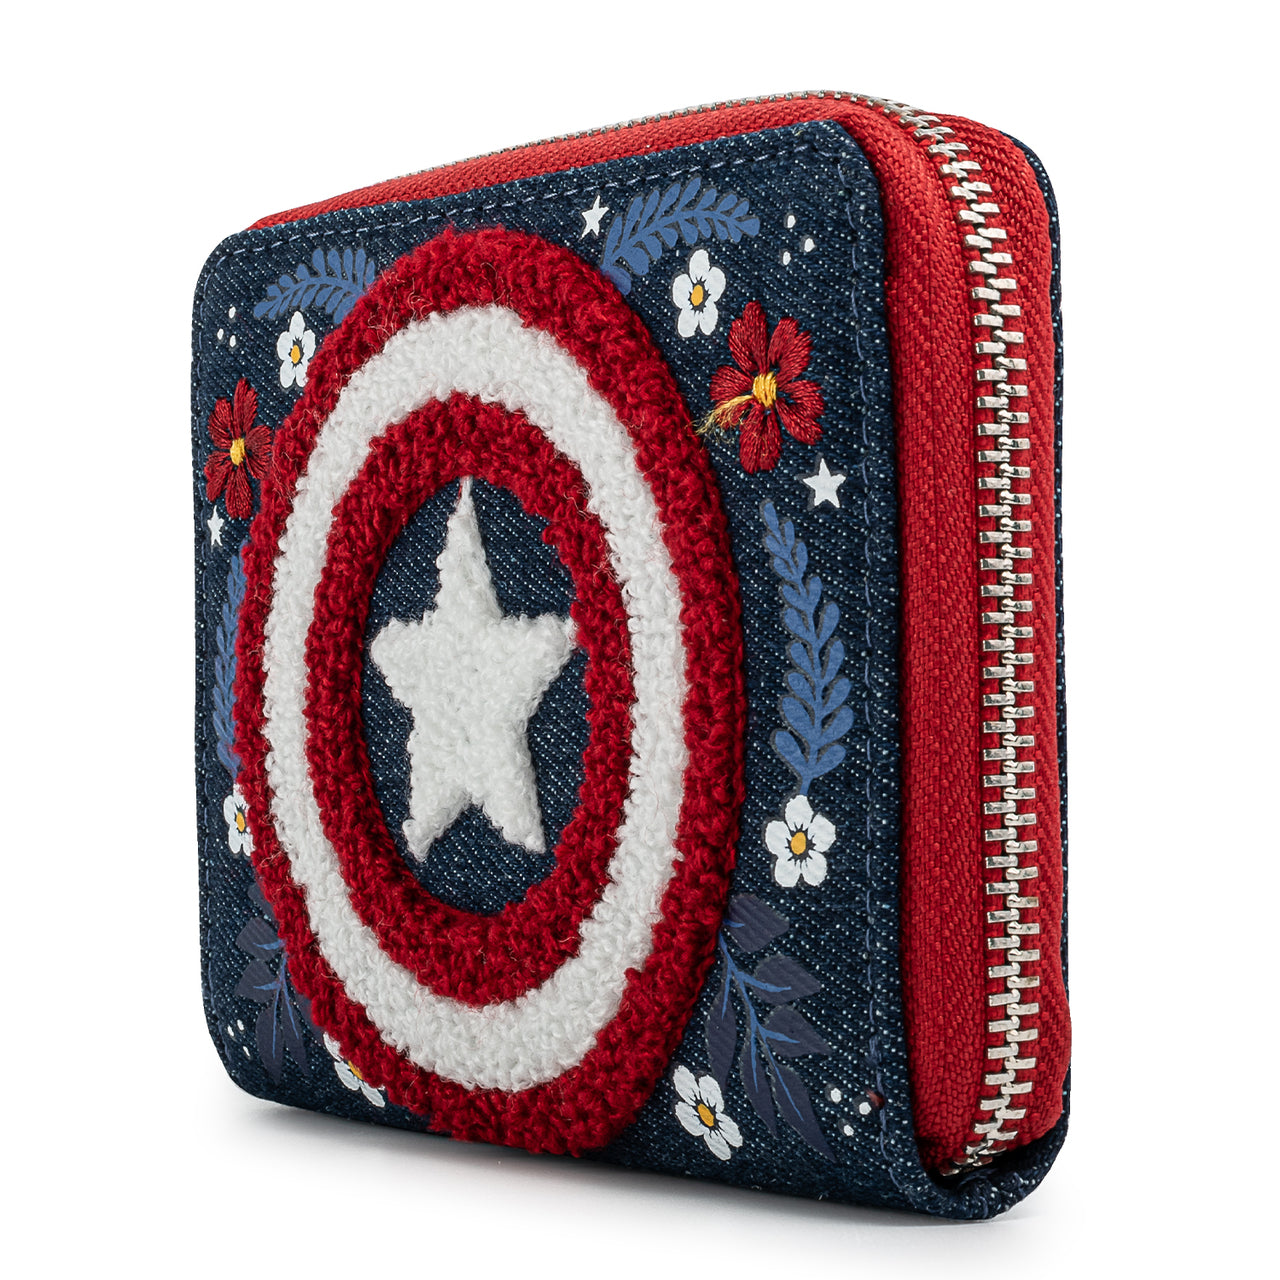 Marvel Captain America 80th Anniversary Ziparound Wallet